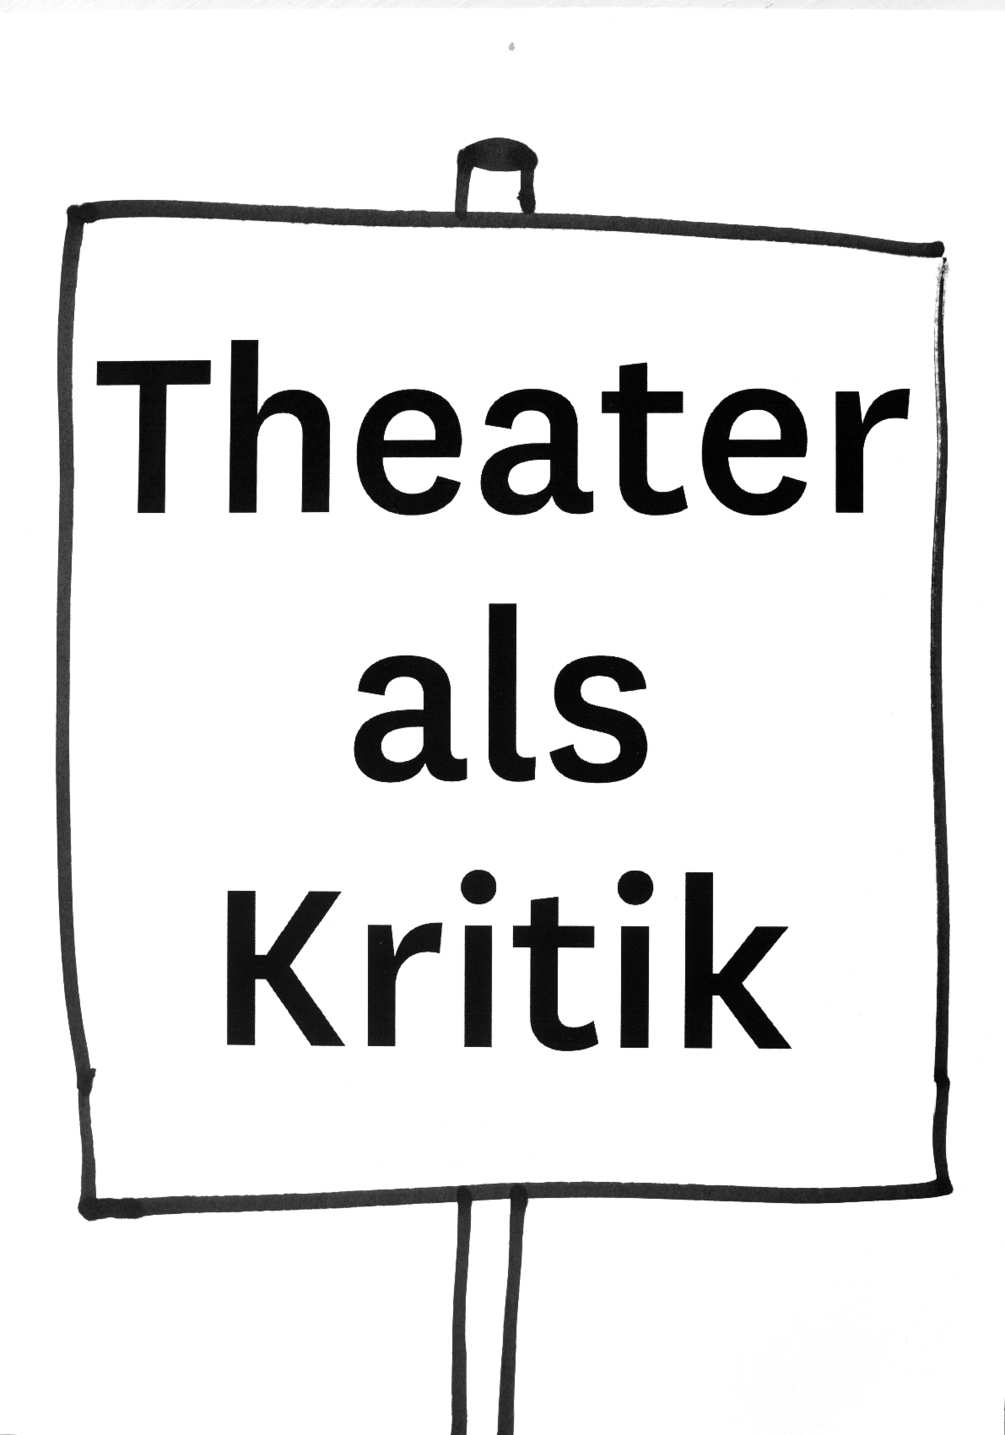 theater-as-critique-slip-31-1005x1435px